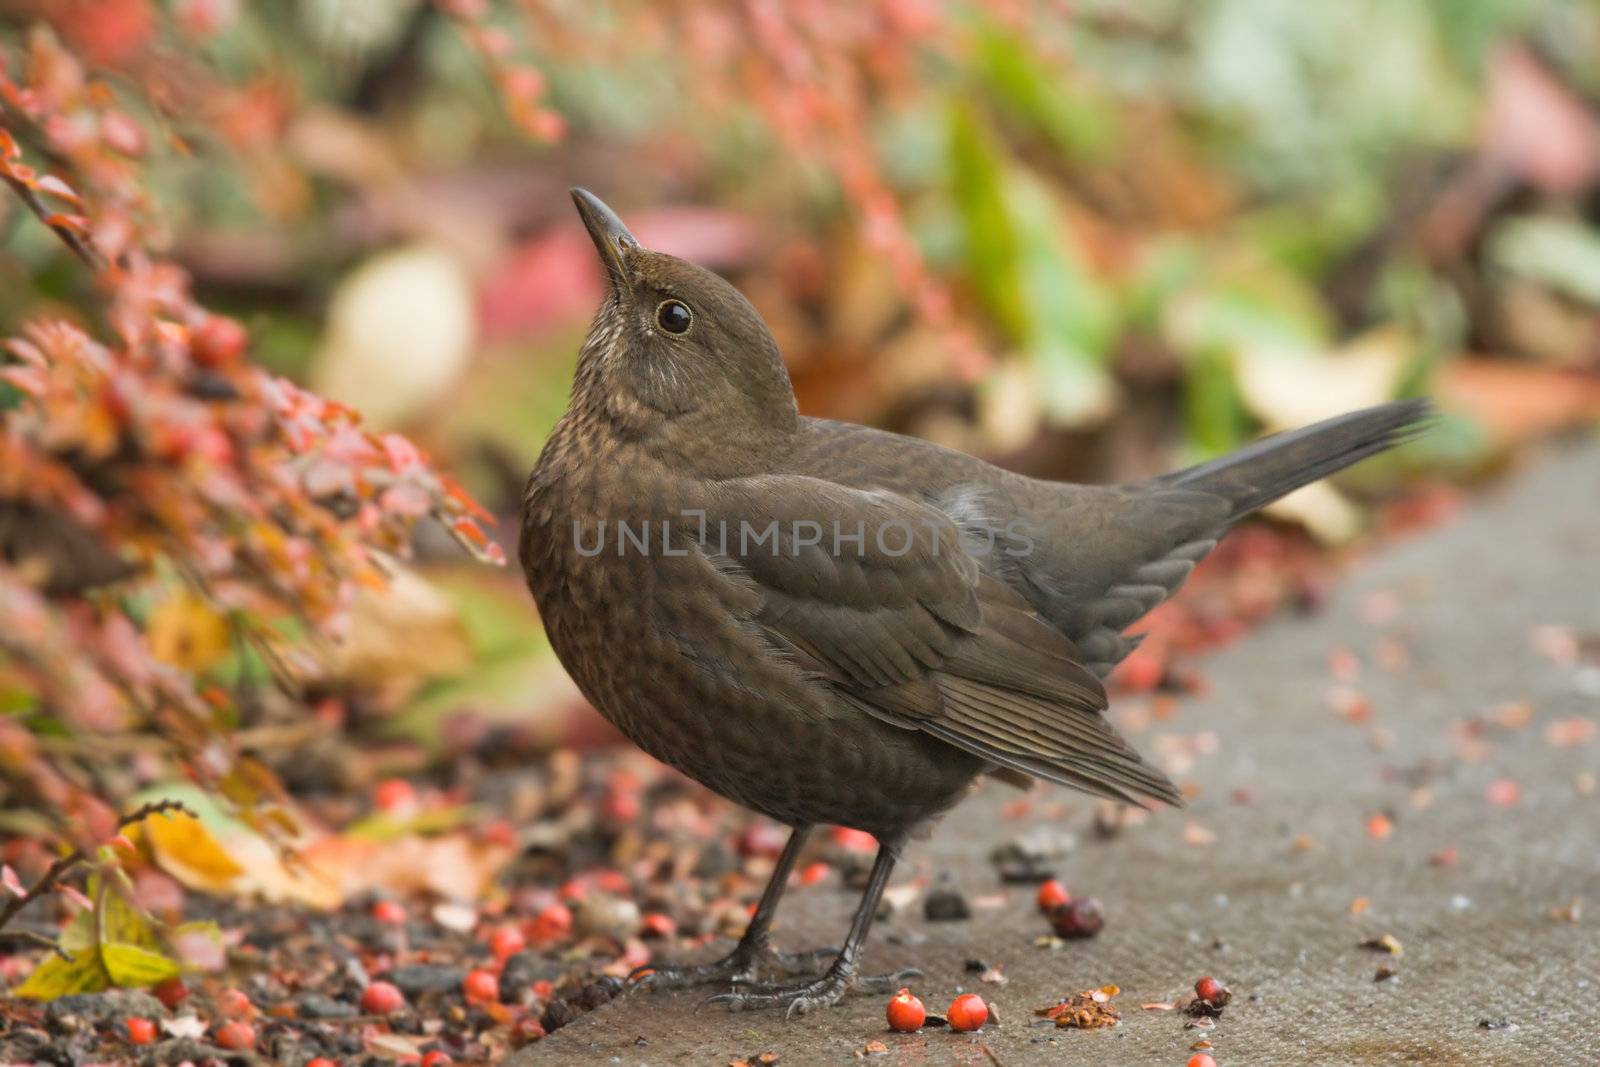 Female blackbird in its natural habitat